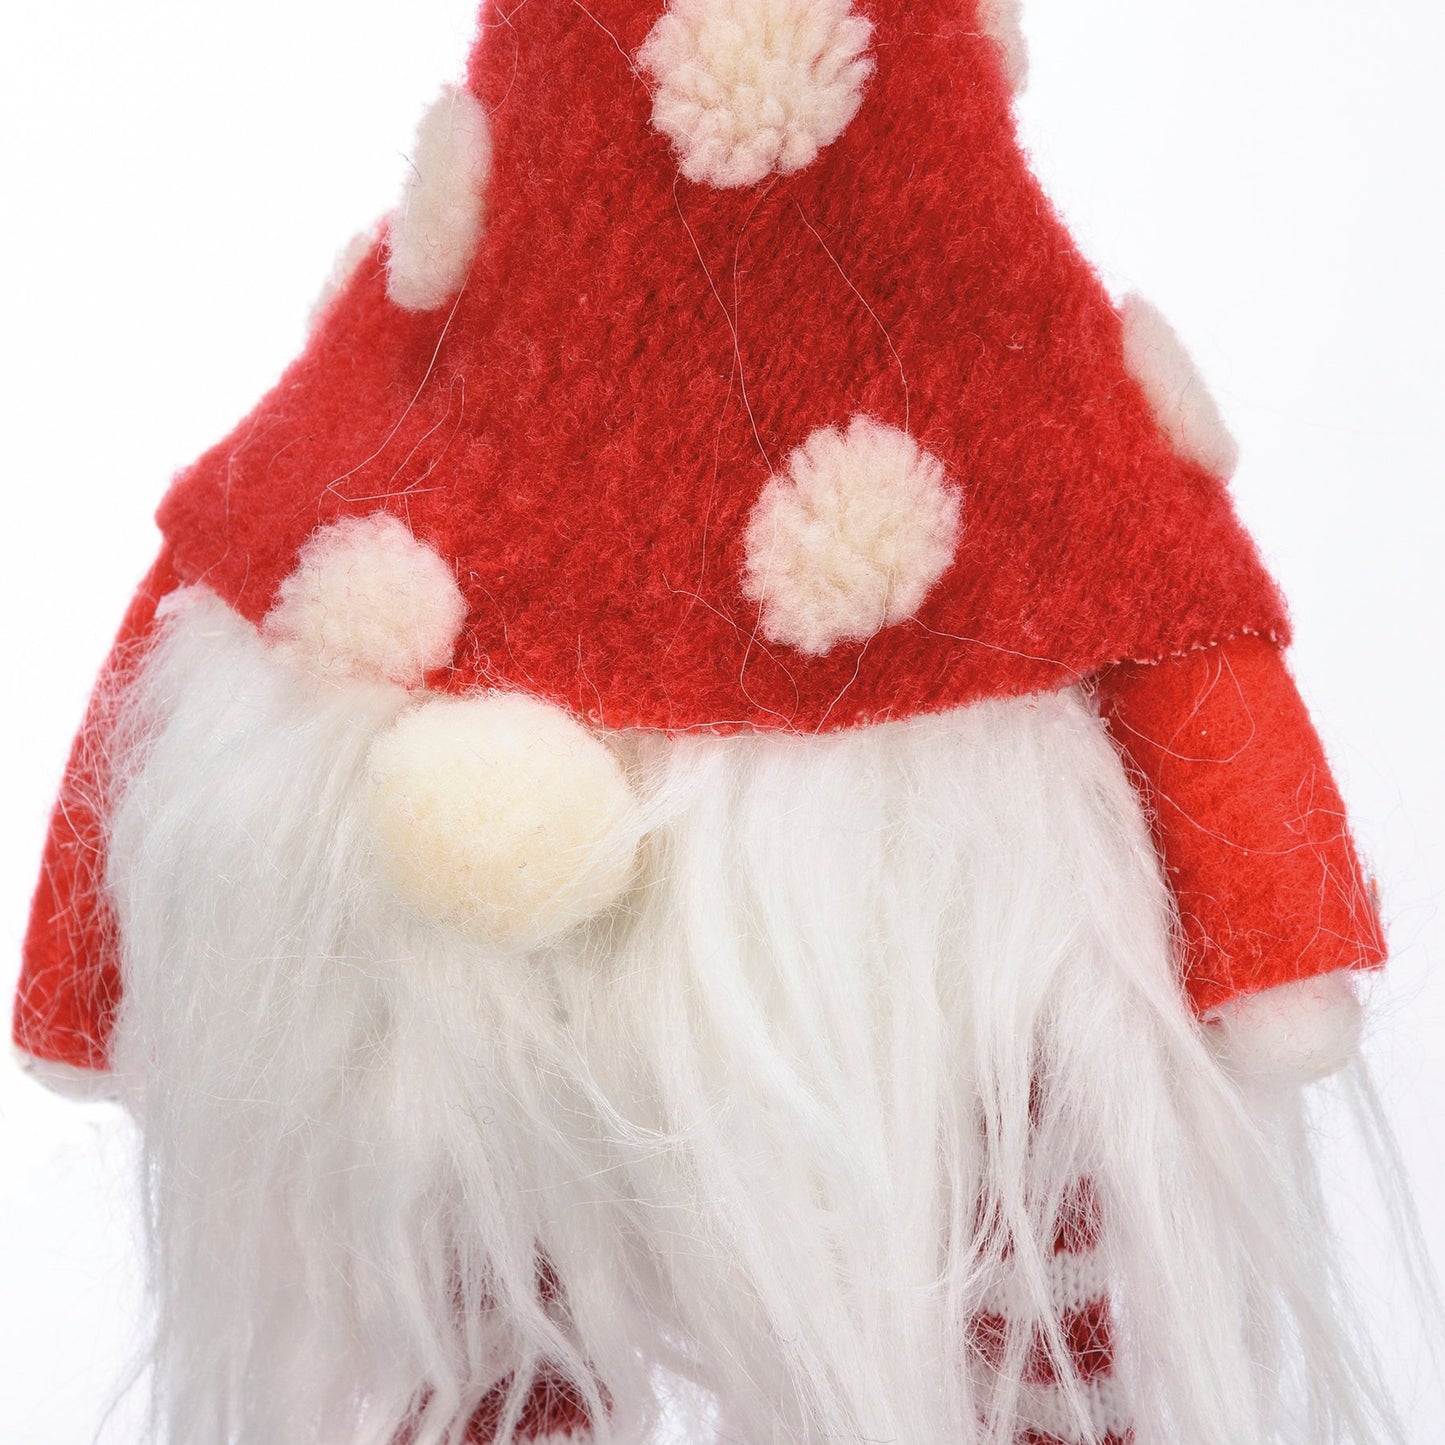 Ornament - Red Polka Dot Gnome